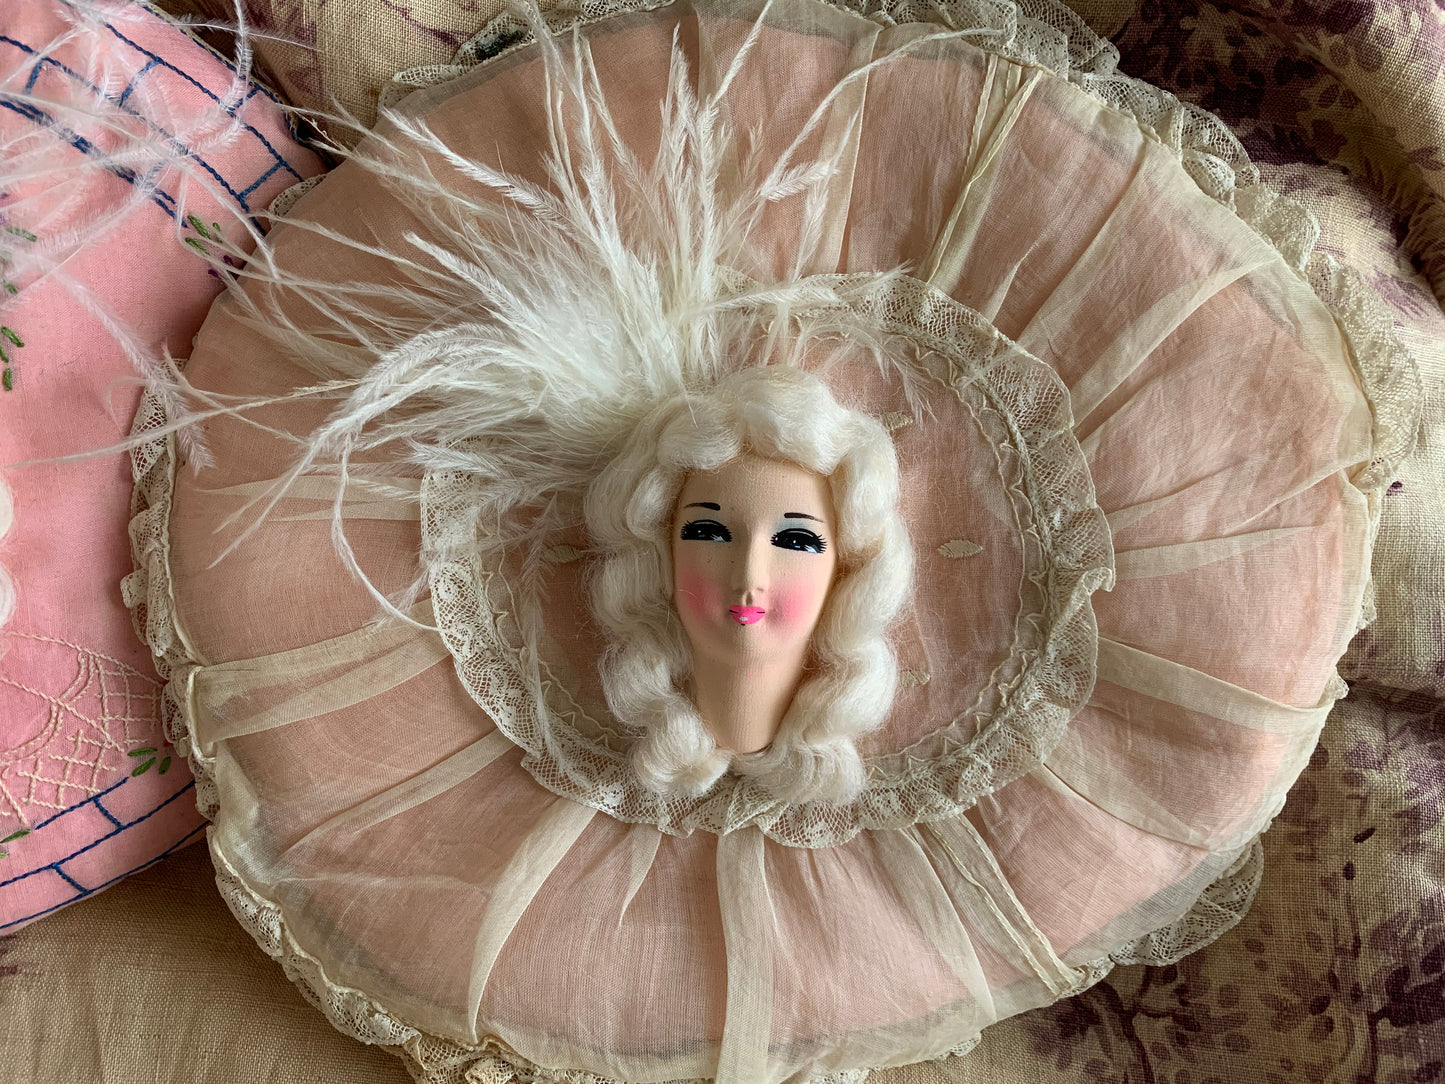 Vintage assembled doll face pillow